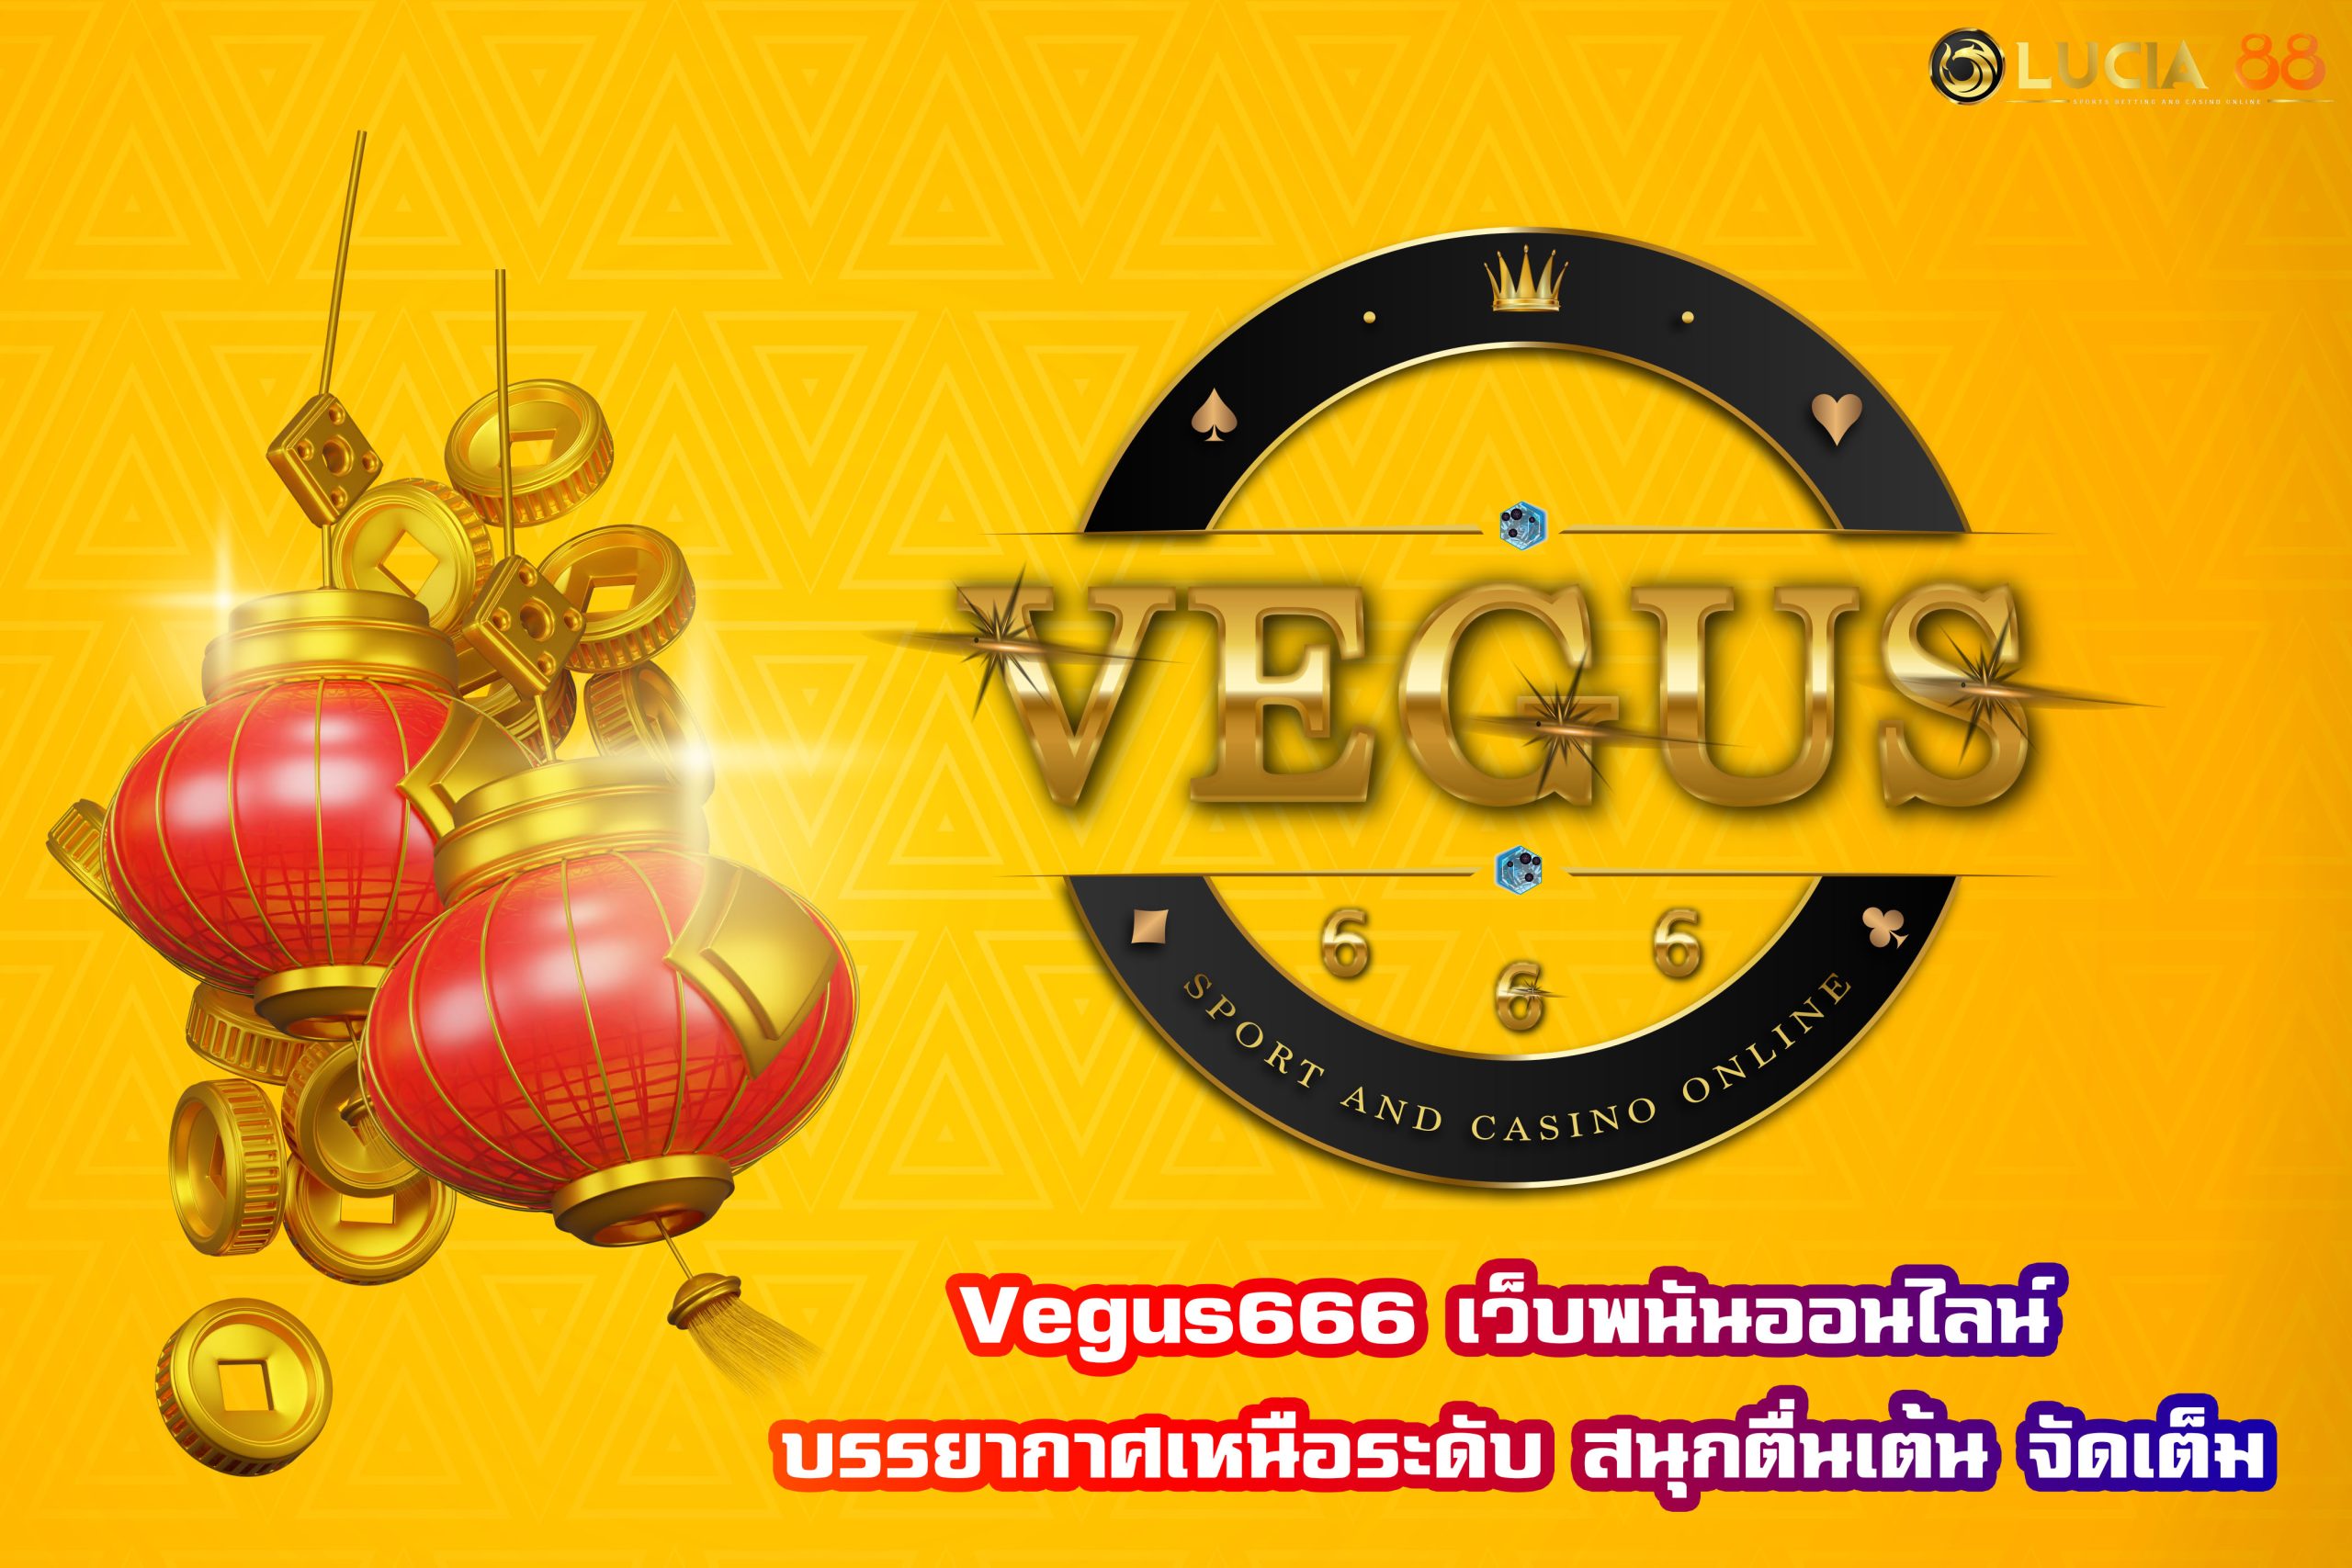 Vegus666 เว็บพนันออนไลน์ บรรยากาศเหนือระดับ สนุกตื่นเต้น จัดเต็ม